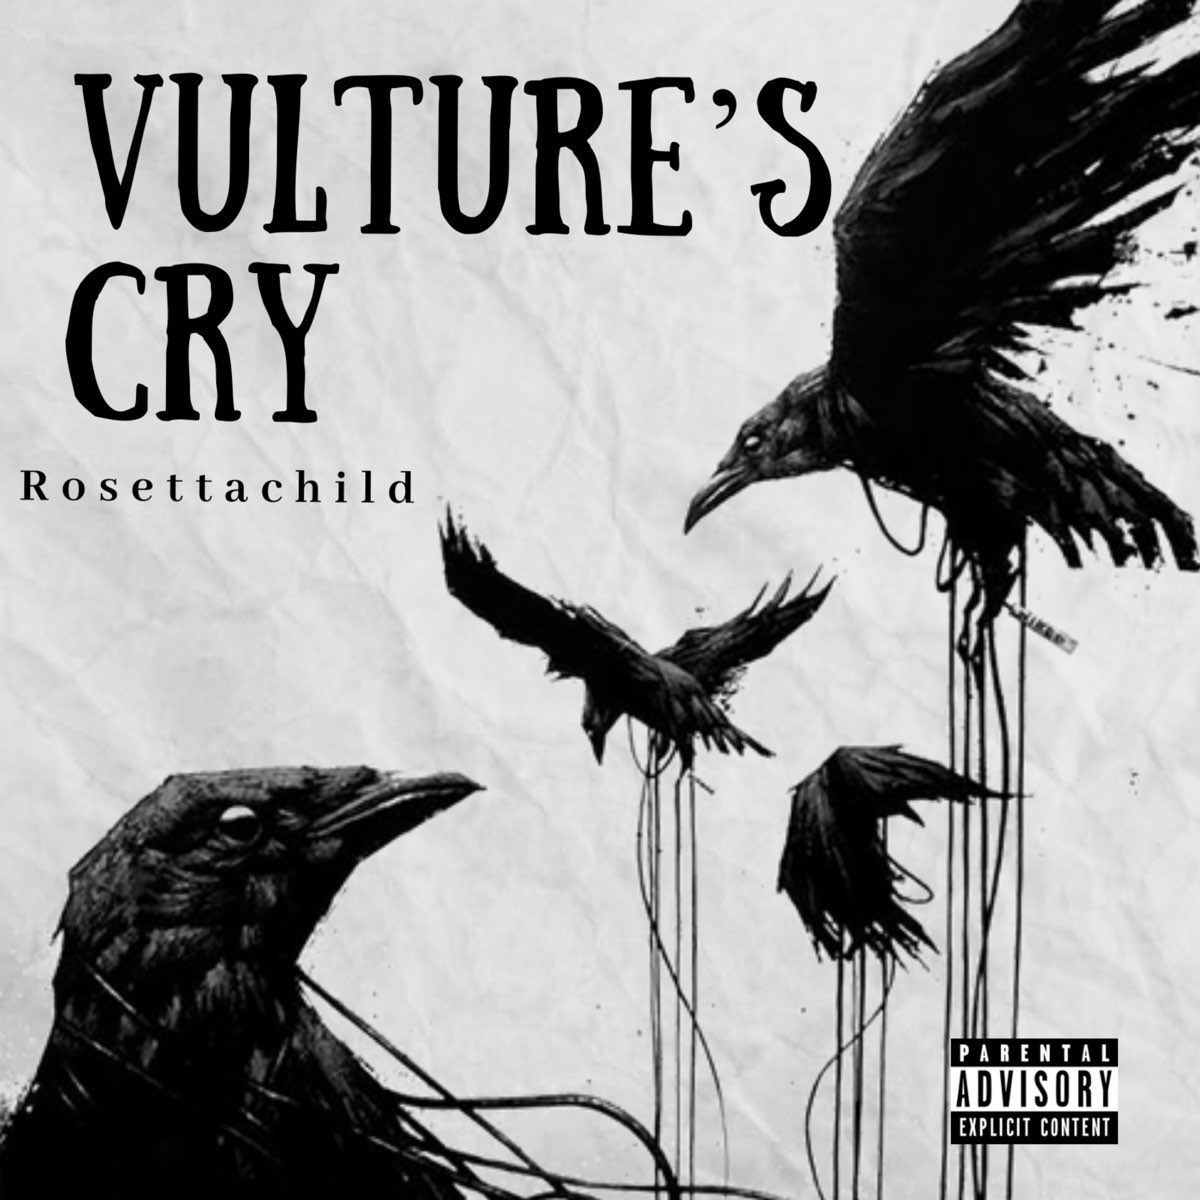 Vultures album. Vultures альбом. Обложка альбома Vultures. Логотип альбома Vultures. Стервятник песня.